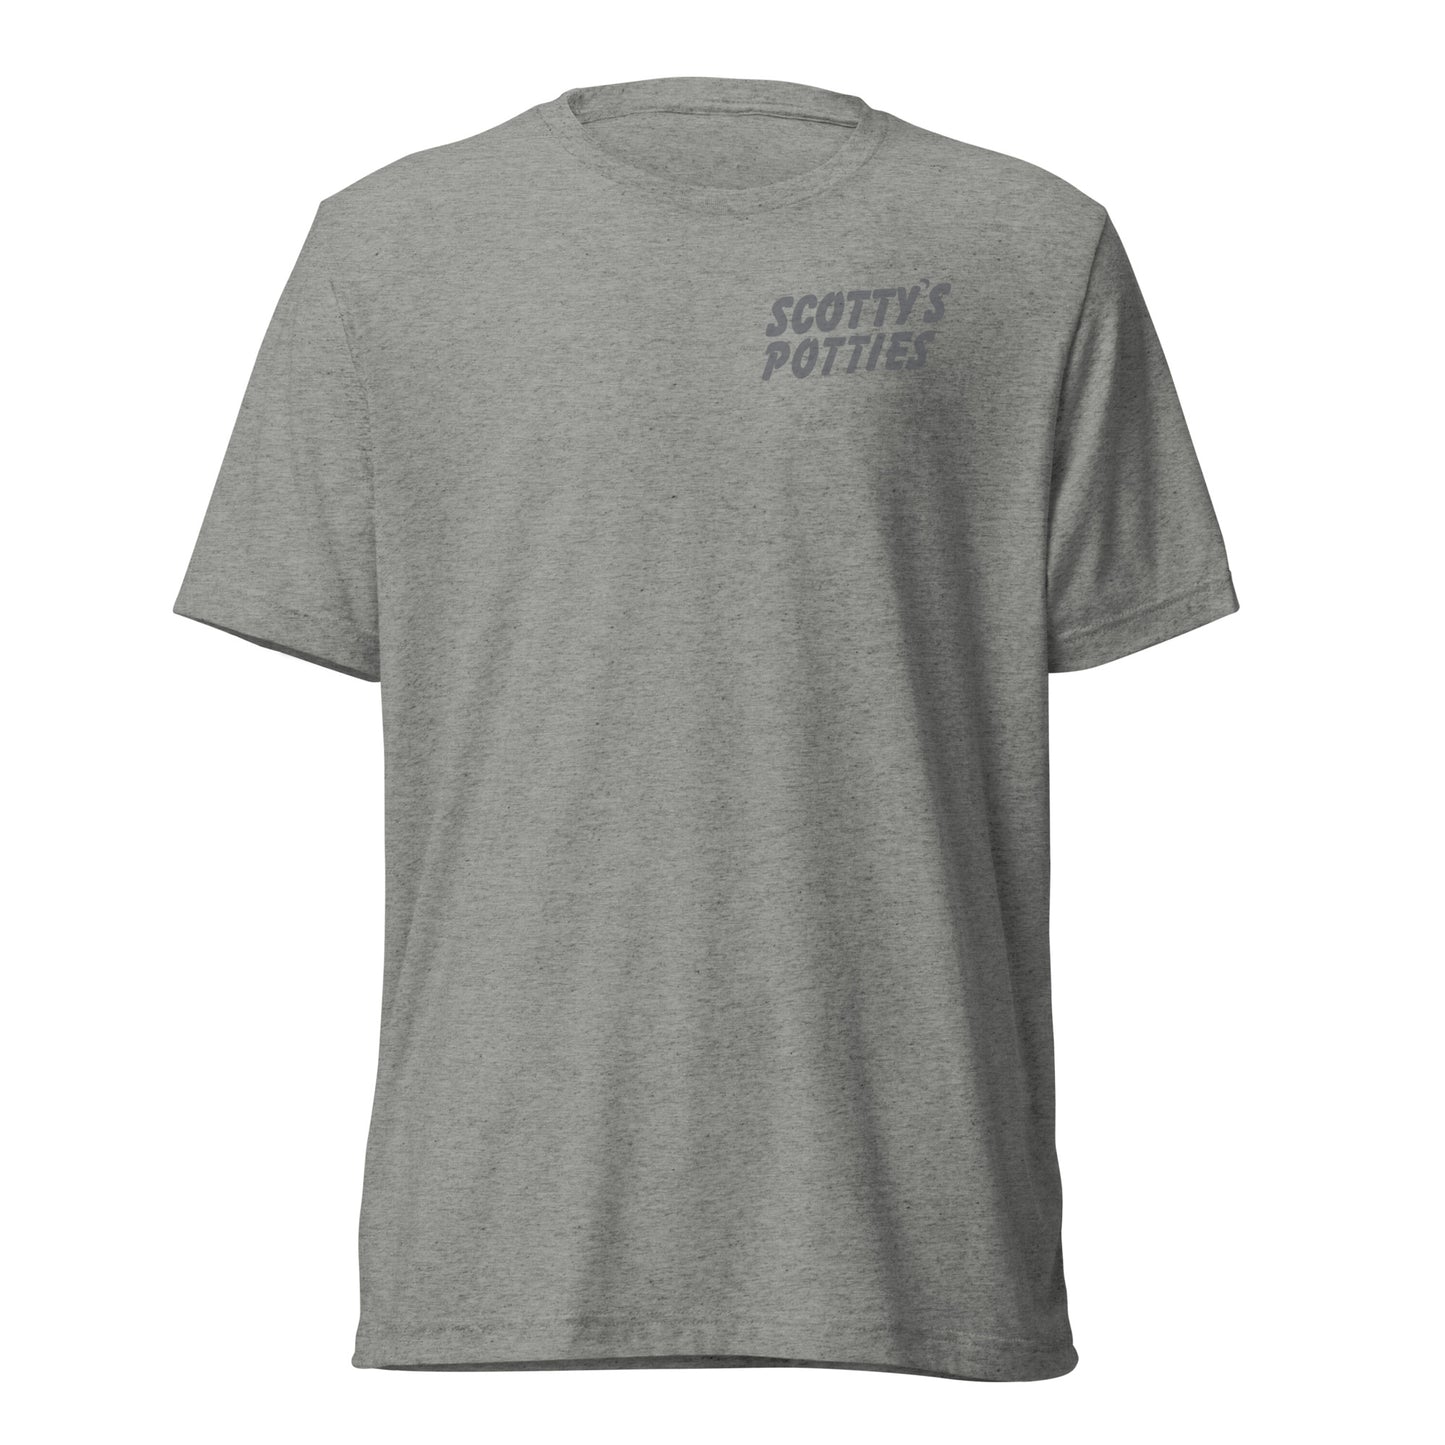 Scotty’s Potties Short sleeve t-shirt